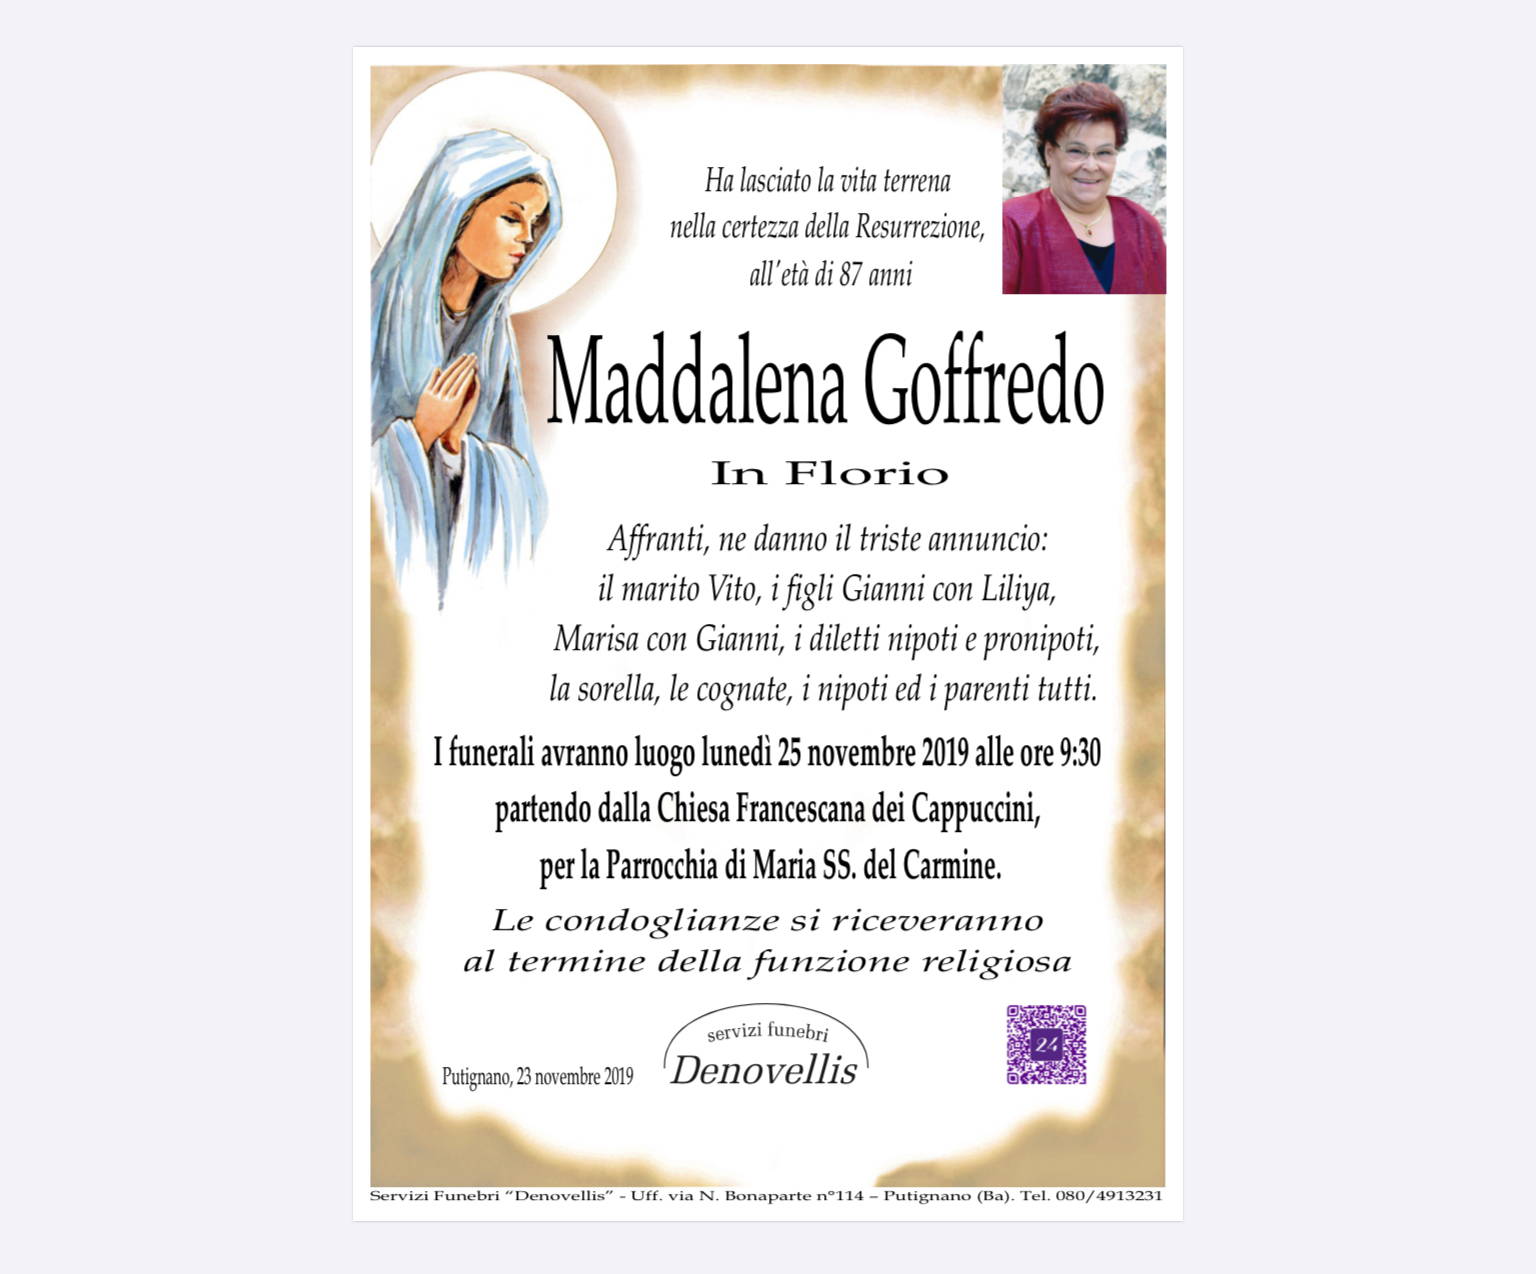 Maddalena Goffredo